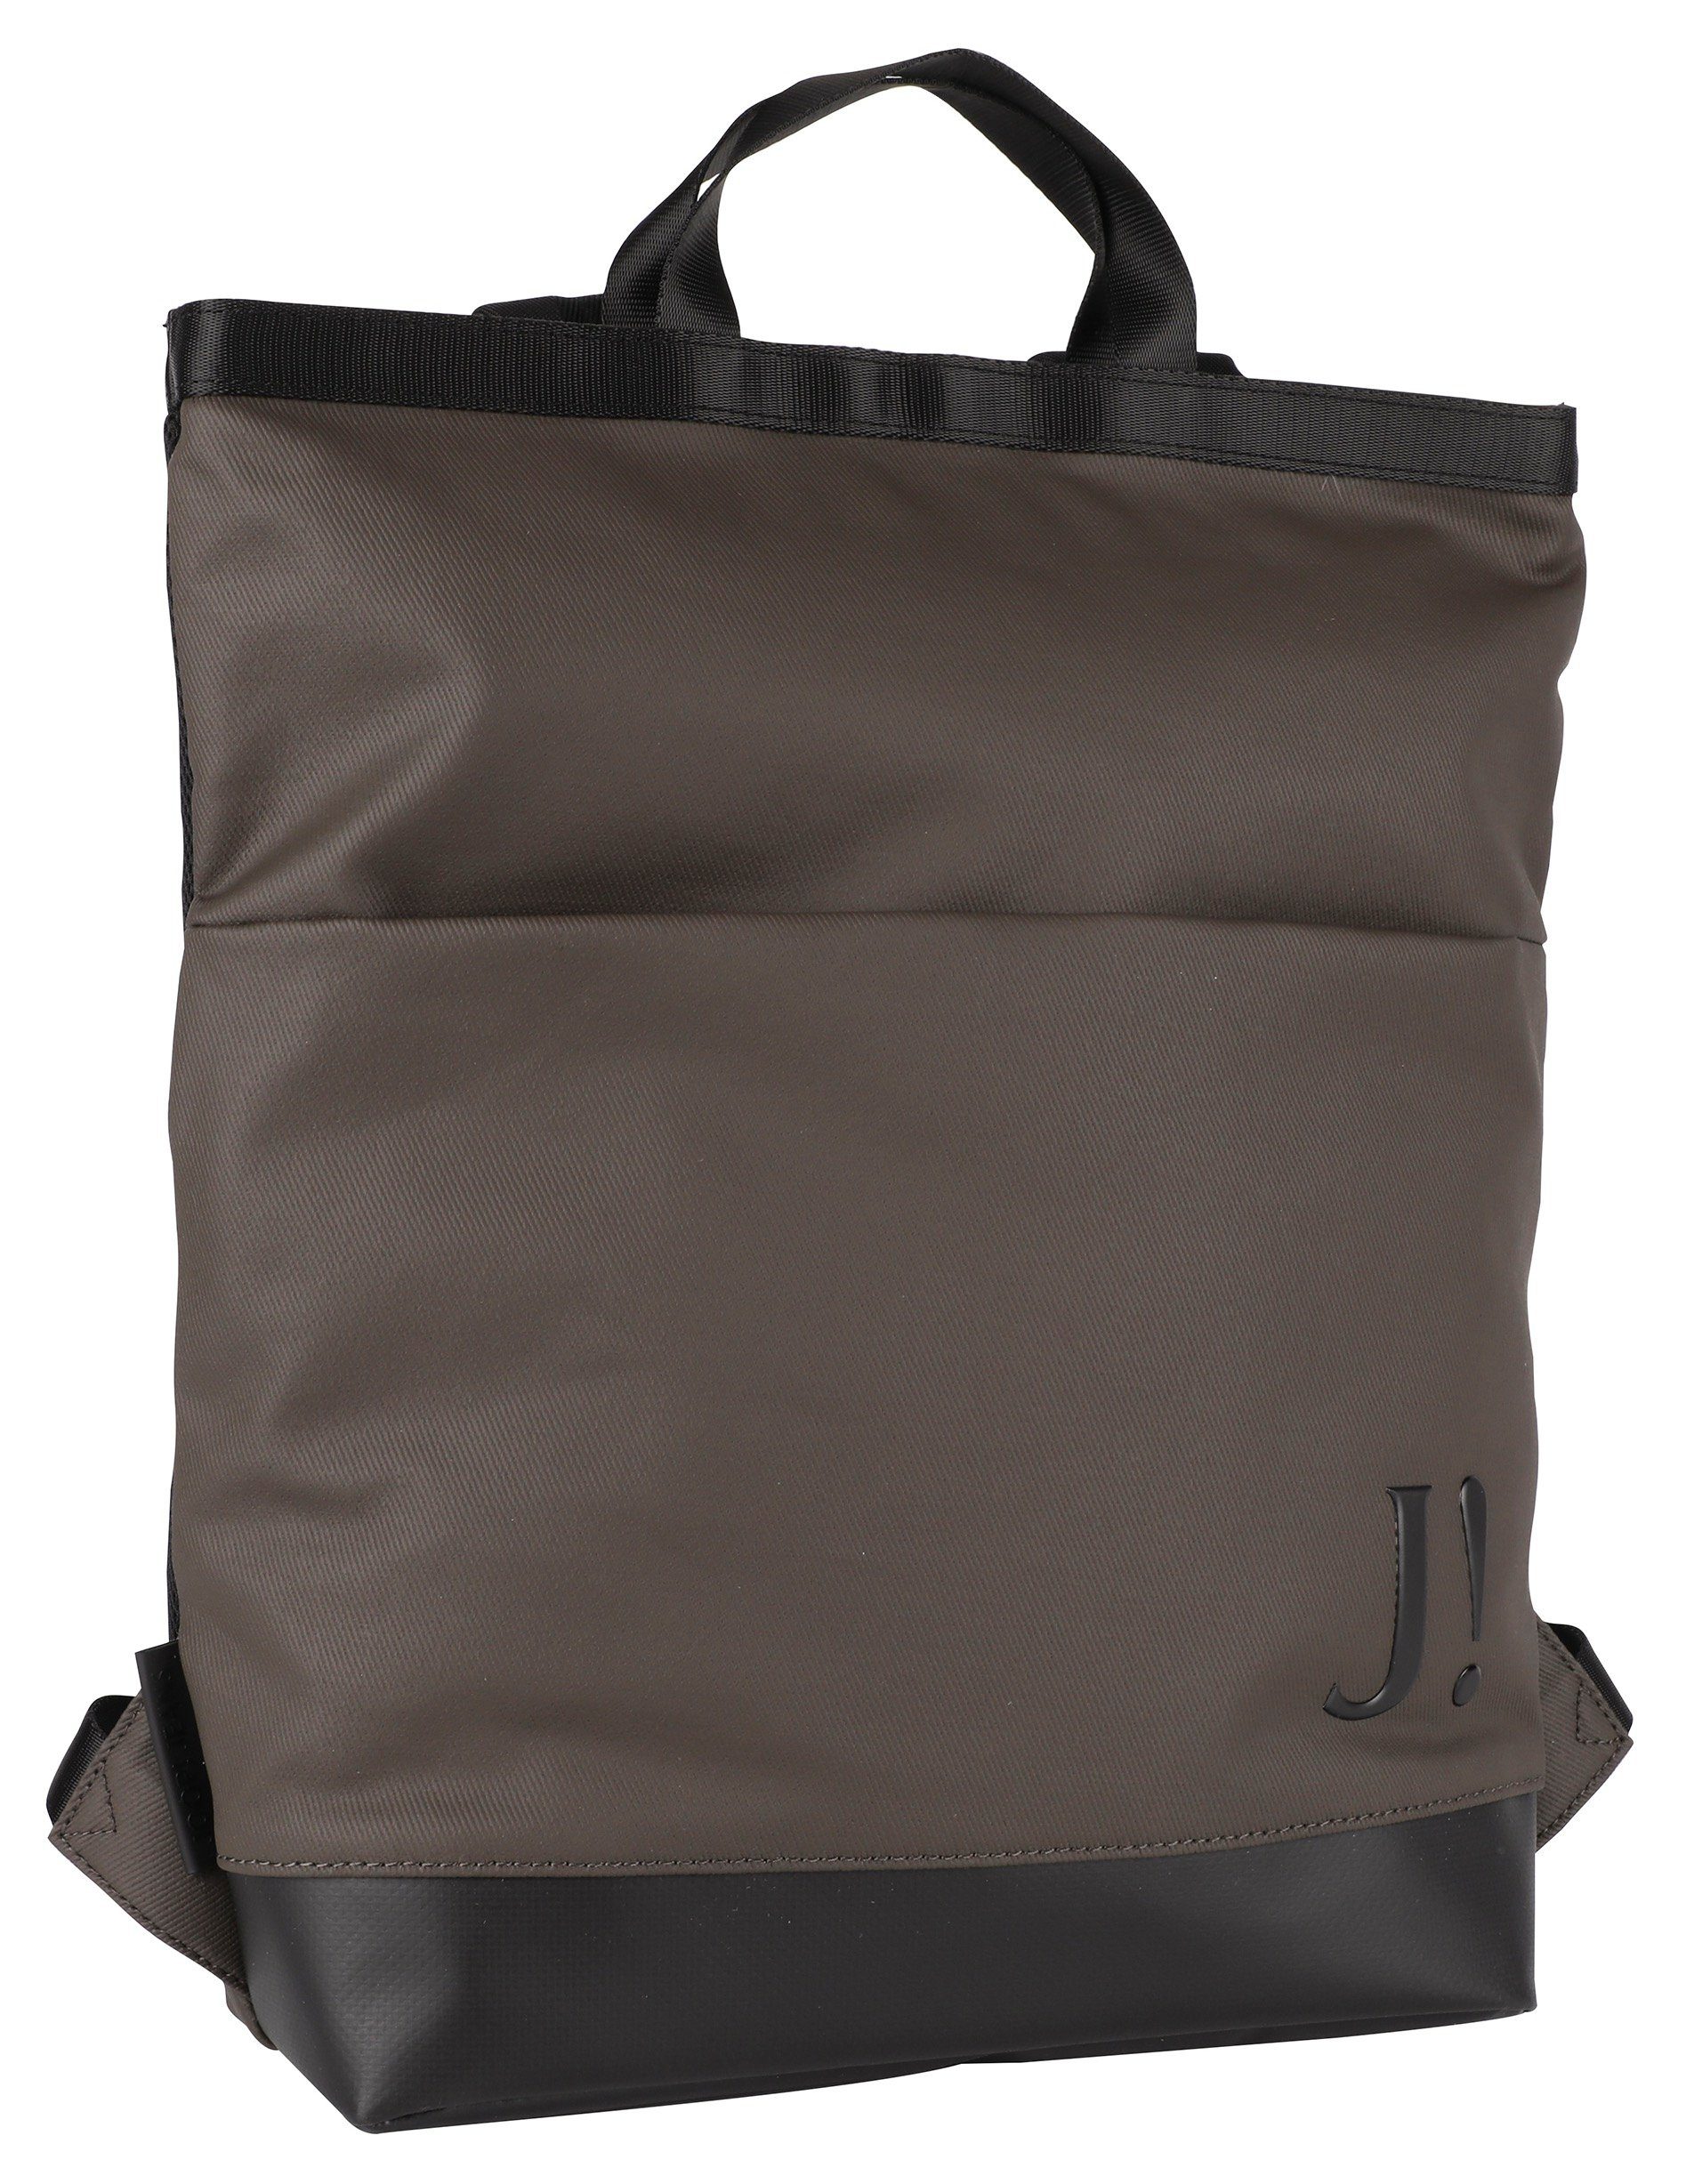 Jeans Cityrucksack falk backpack gepolstertem Joop mvz, olivgrün marcena Rücken mit